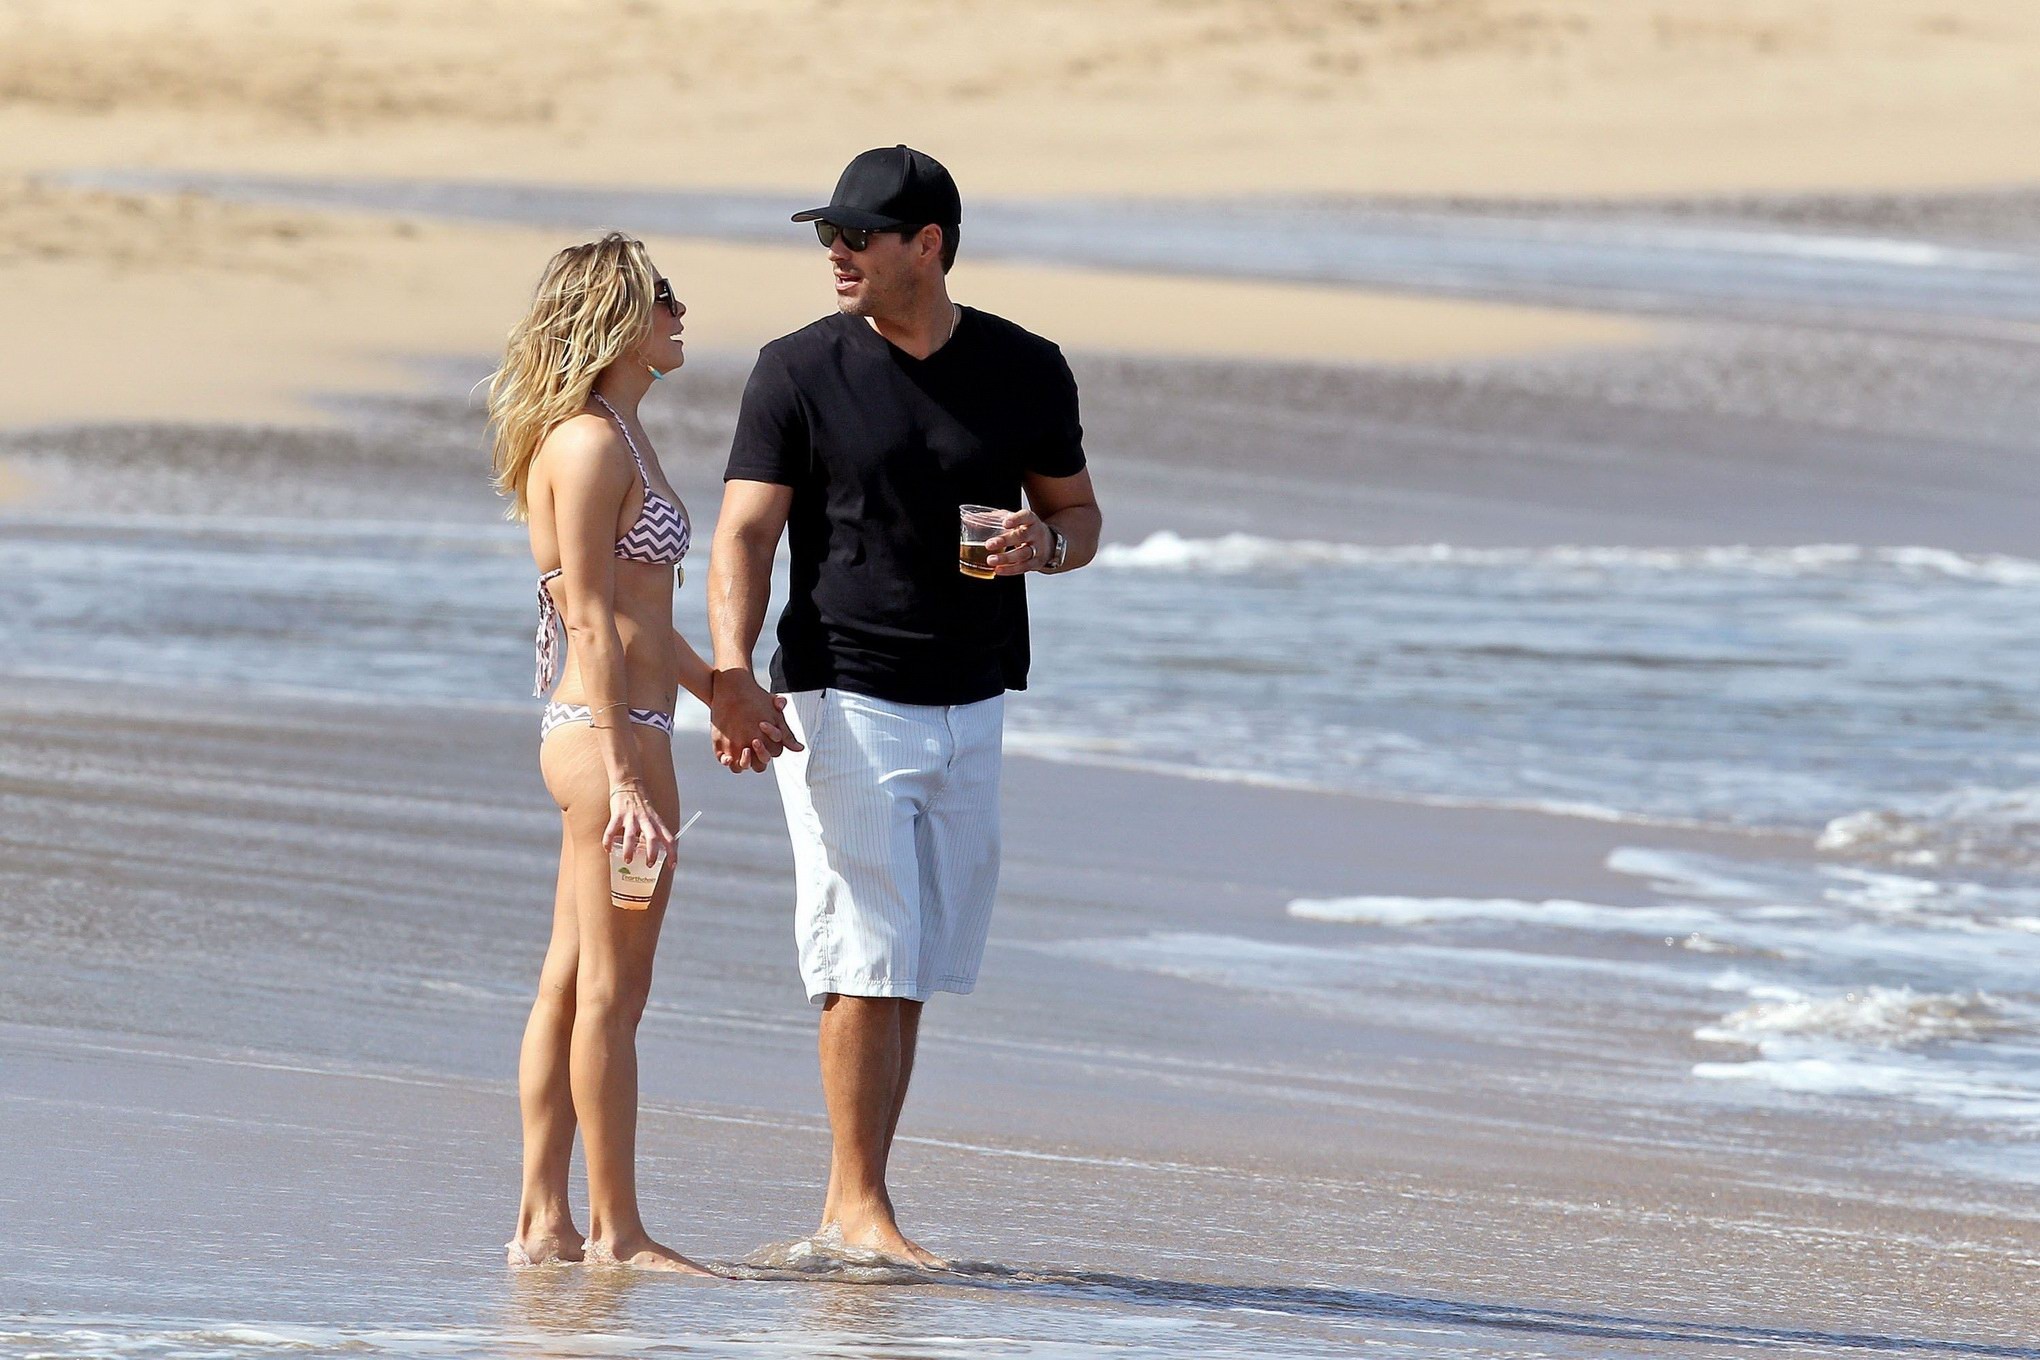 Leann rimes en bikini avec son mari sur une plage hawaïenne
 #75276929